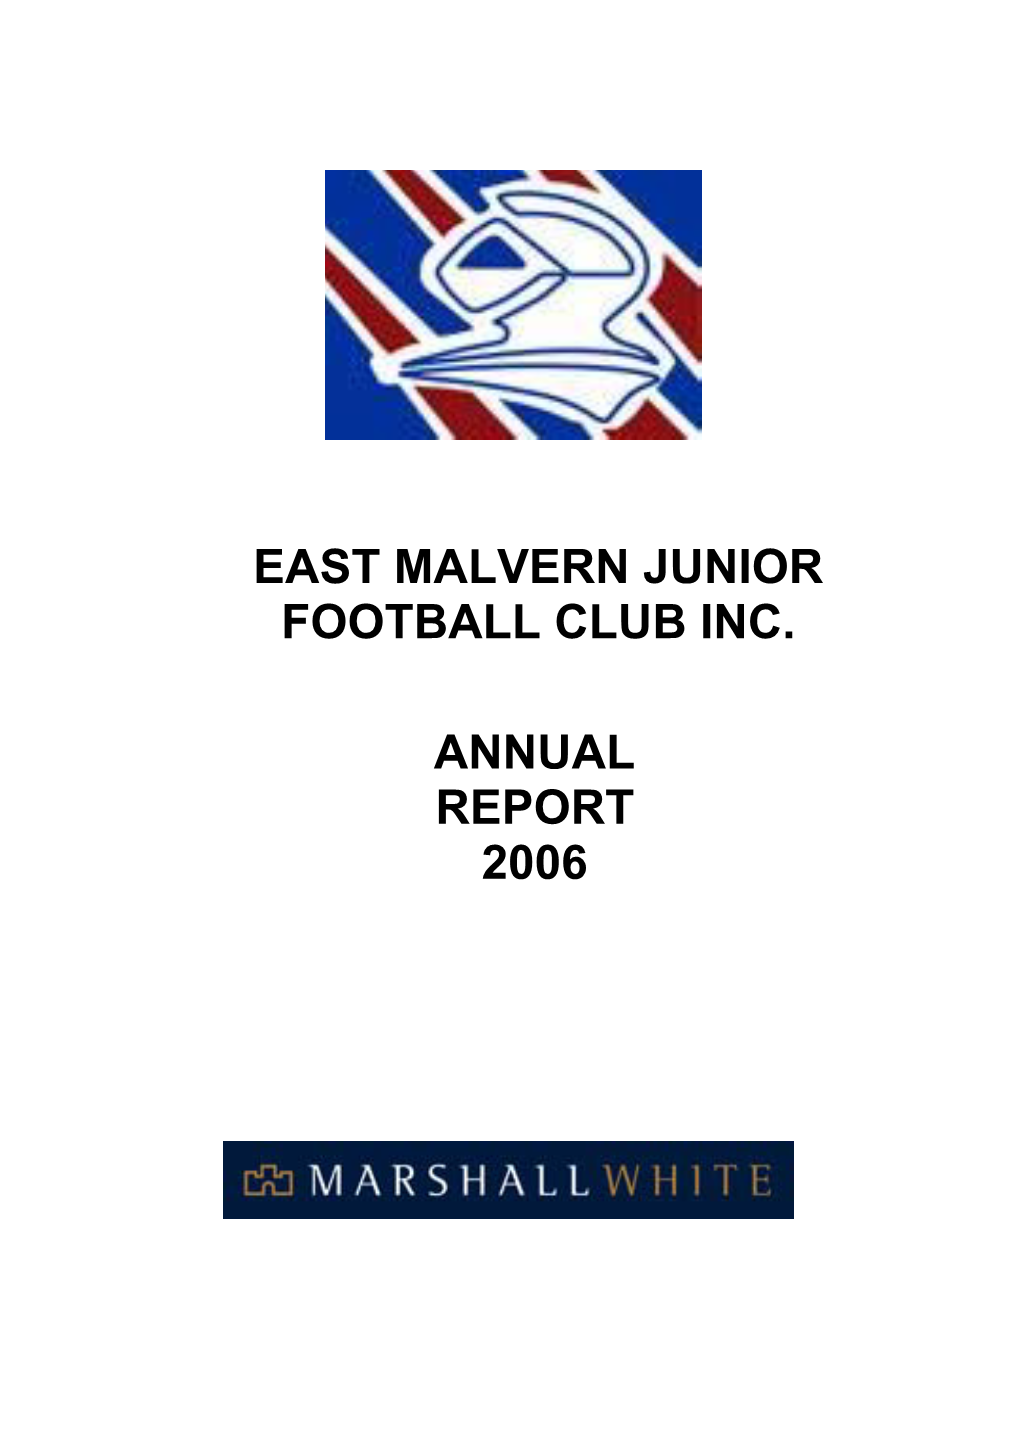 East Malvern Junior Football Club Inc. Annual Report 2006